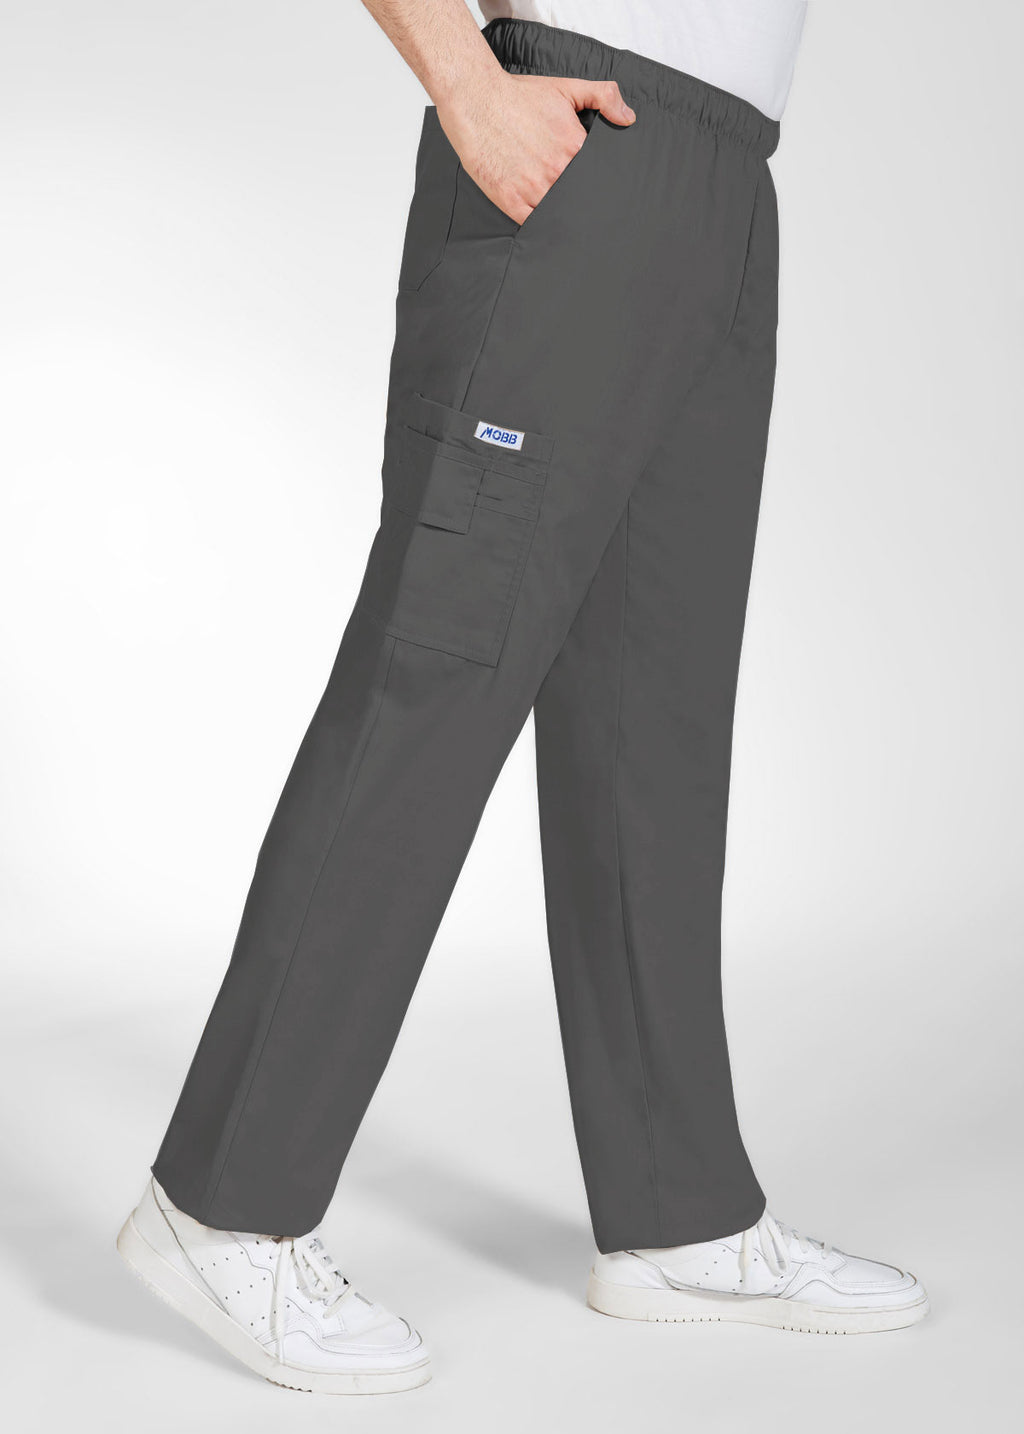 MOBB Drawstring/Elastic 5 Pocket Scrub Pants (CLEARANCE) (307P)